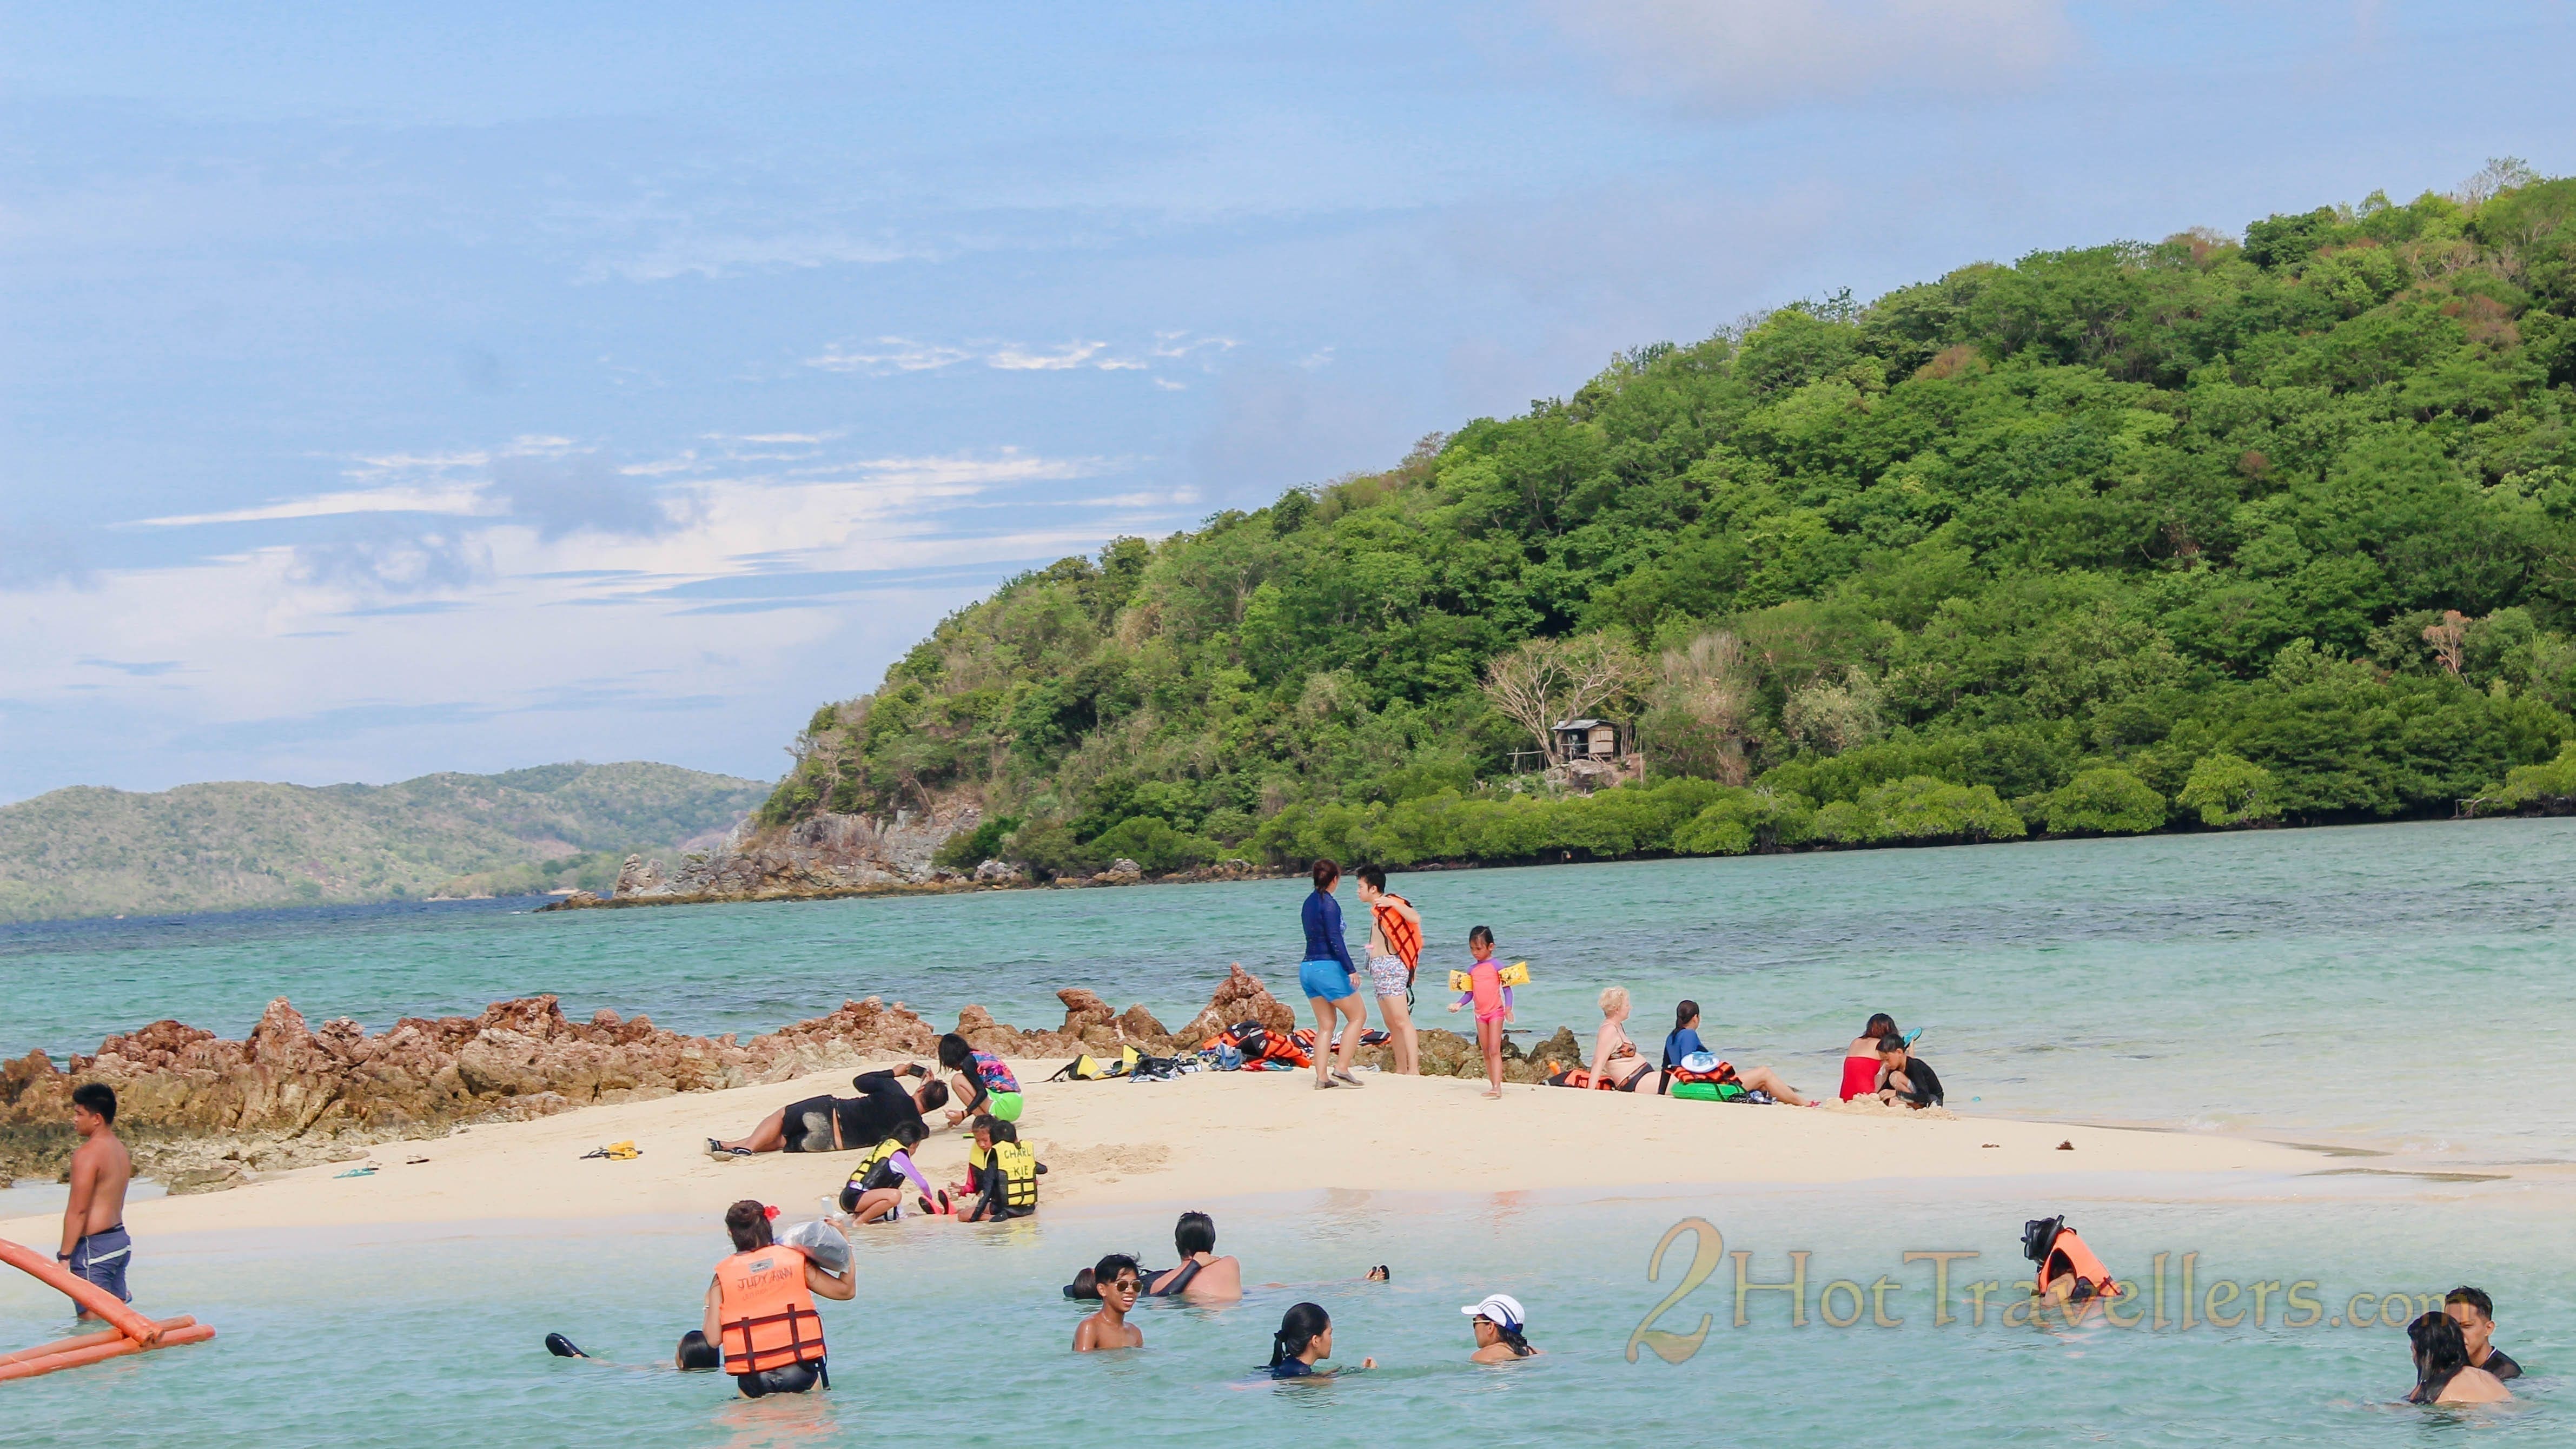 Bulog Dos Island Coron - crowded